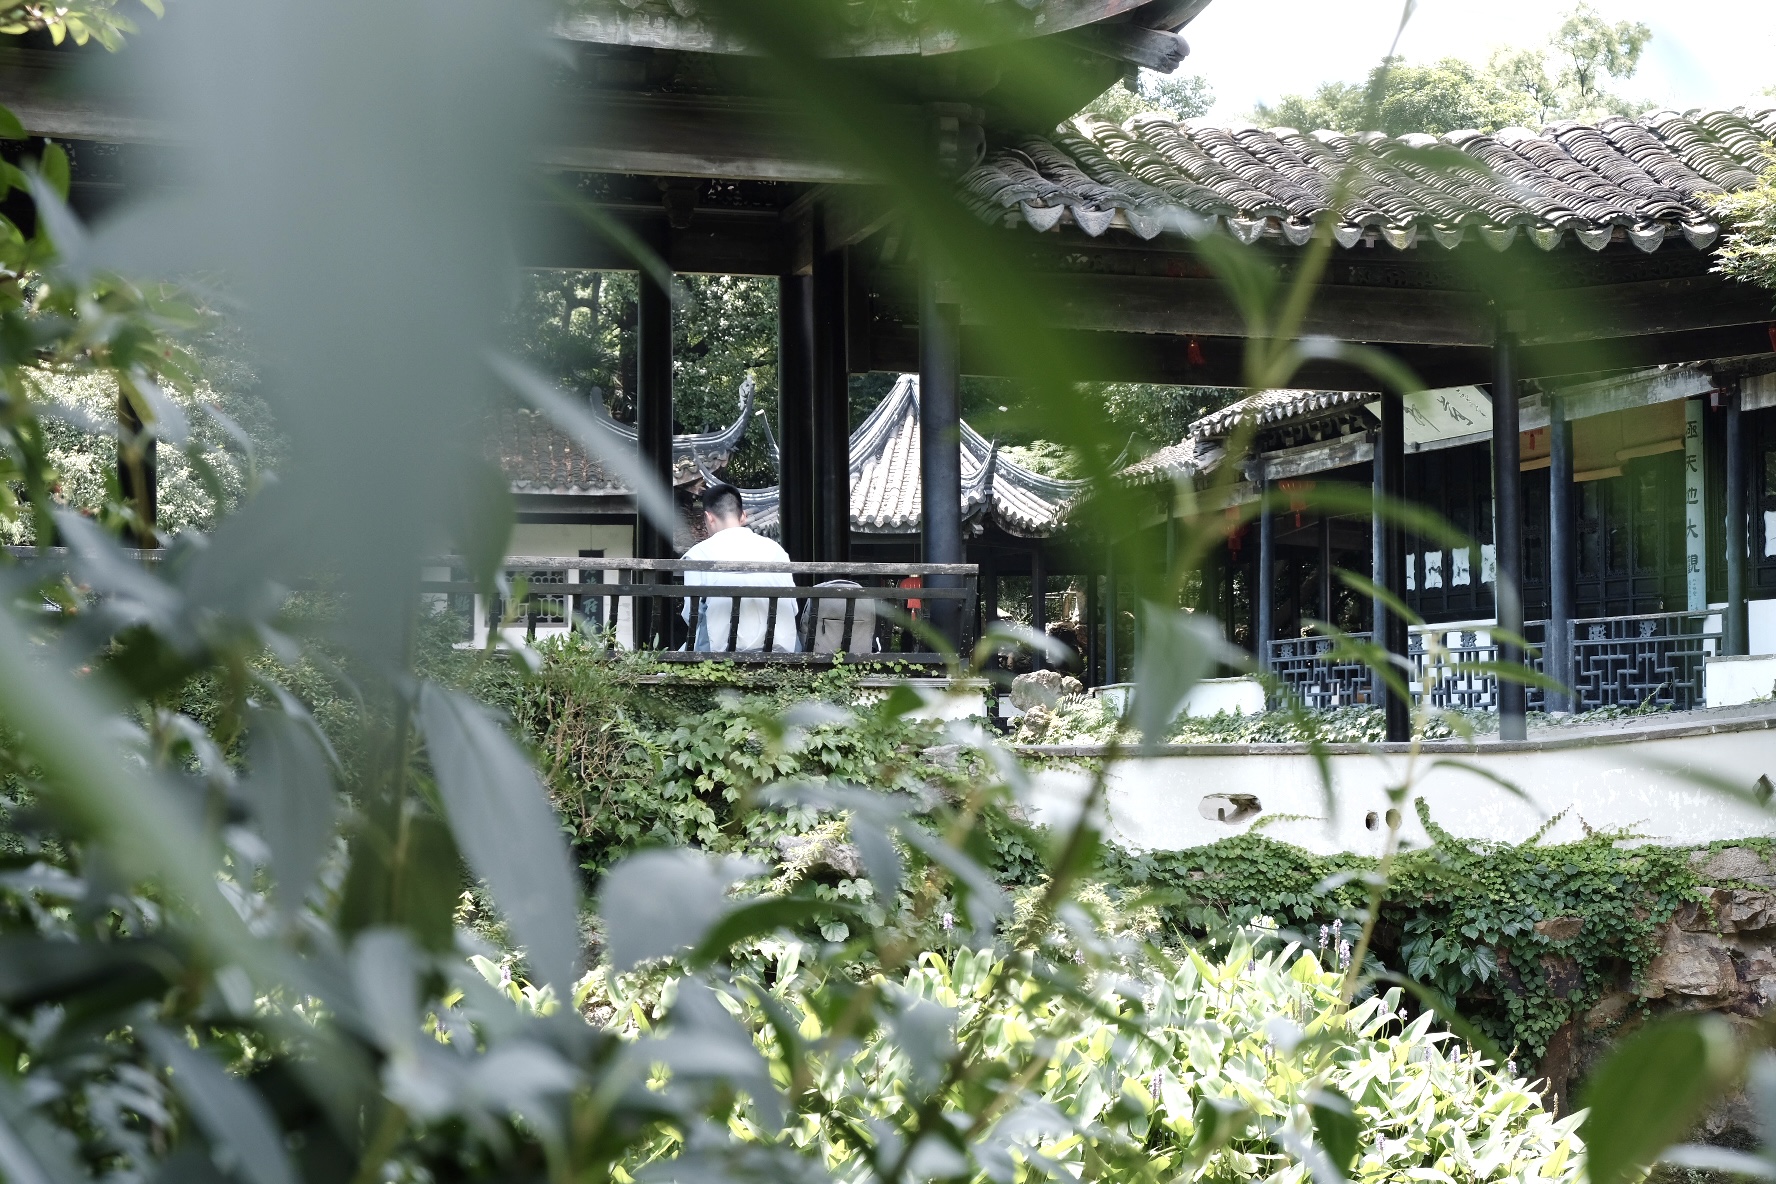 Jichang Garden in Wuxi: The hermit of Chinese gardens